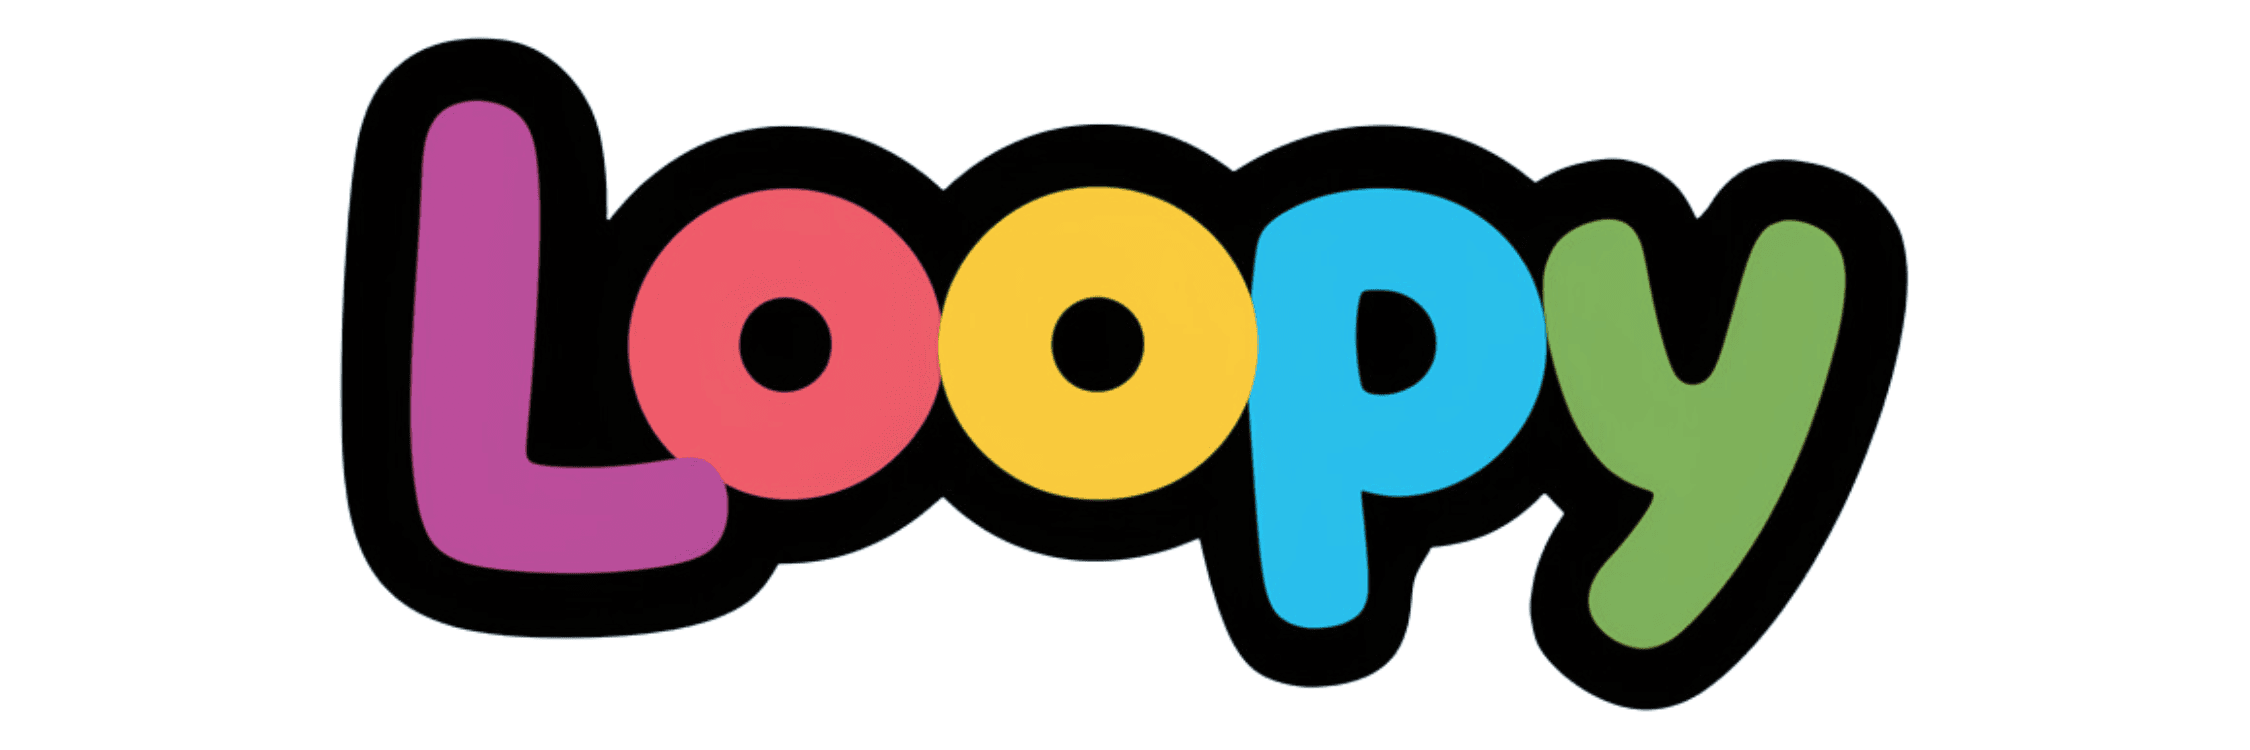 loopy designs logo